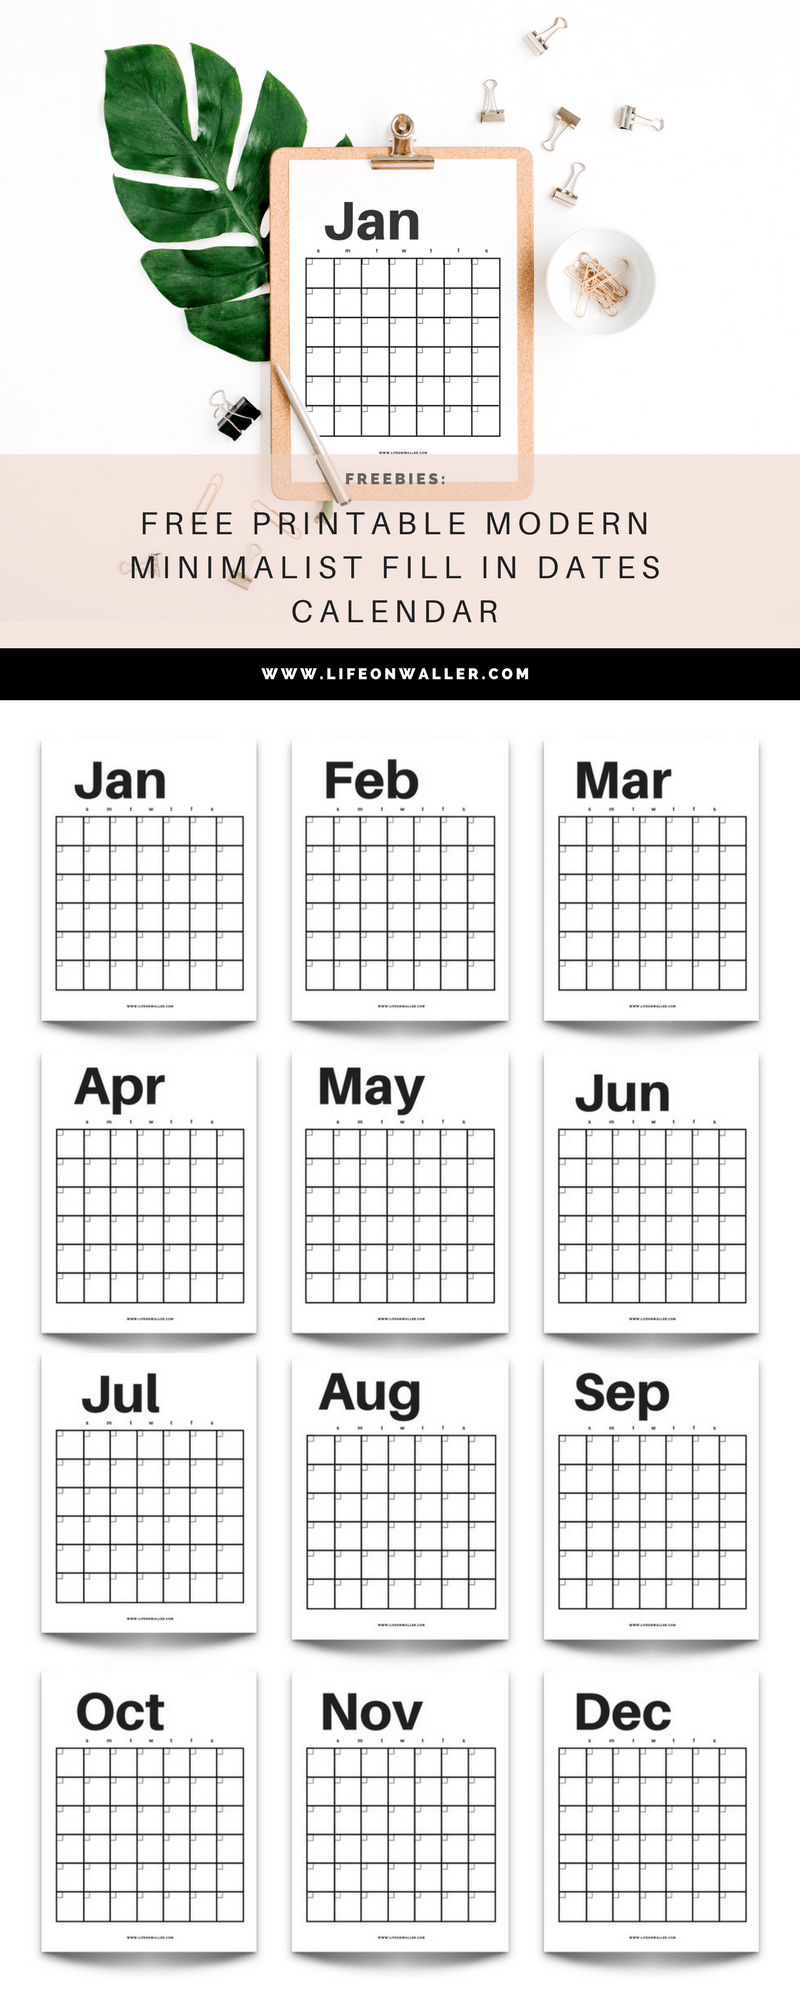 Free Printable Modern Minimalist Fill In Calendar - Use